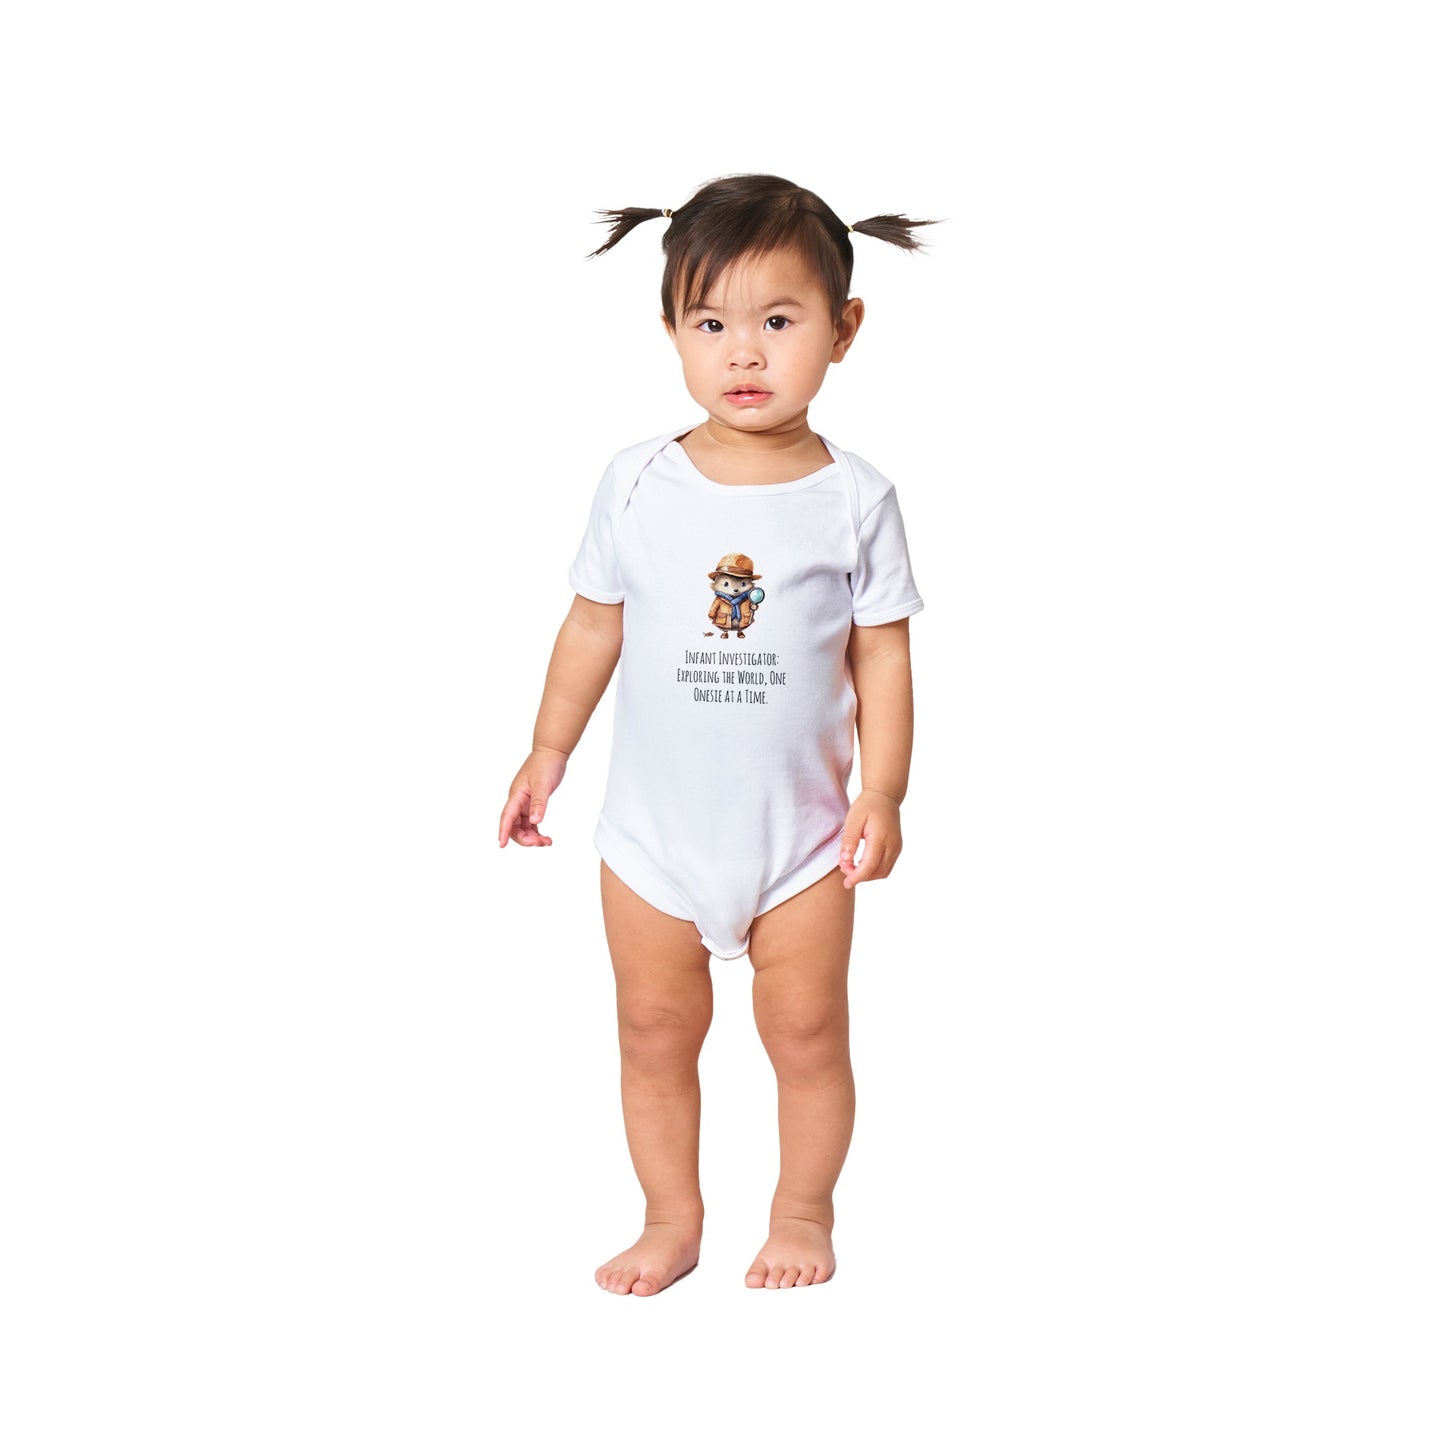 Classic Baby Short Sleeve Bodysuit - Infant Investigator: Exploring The World